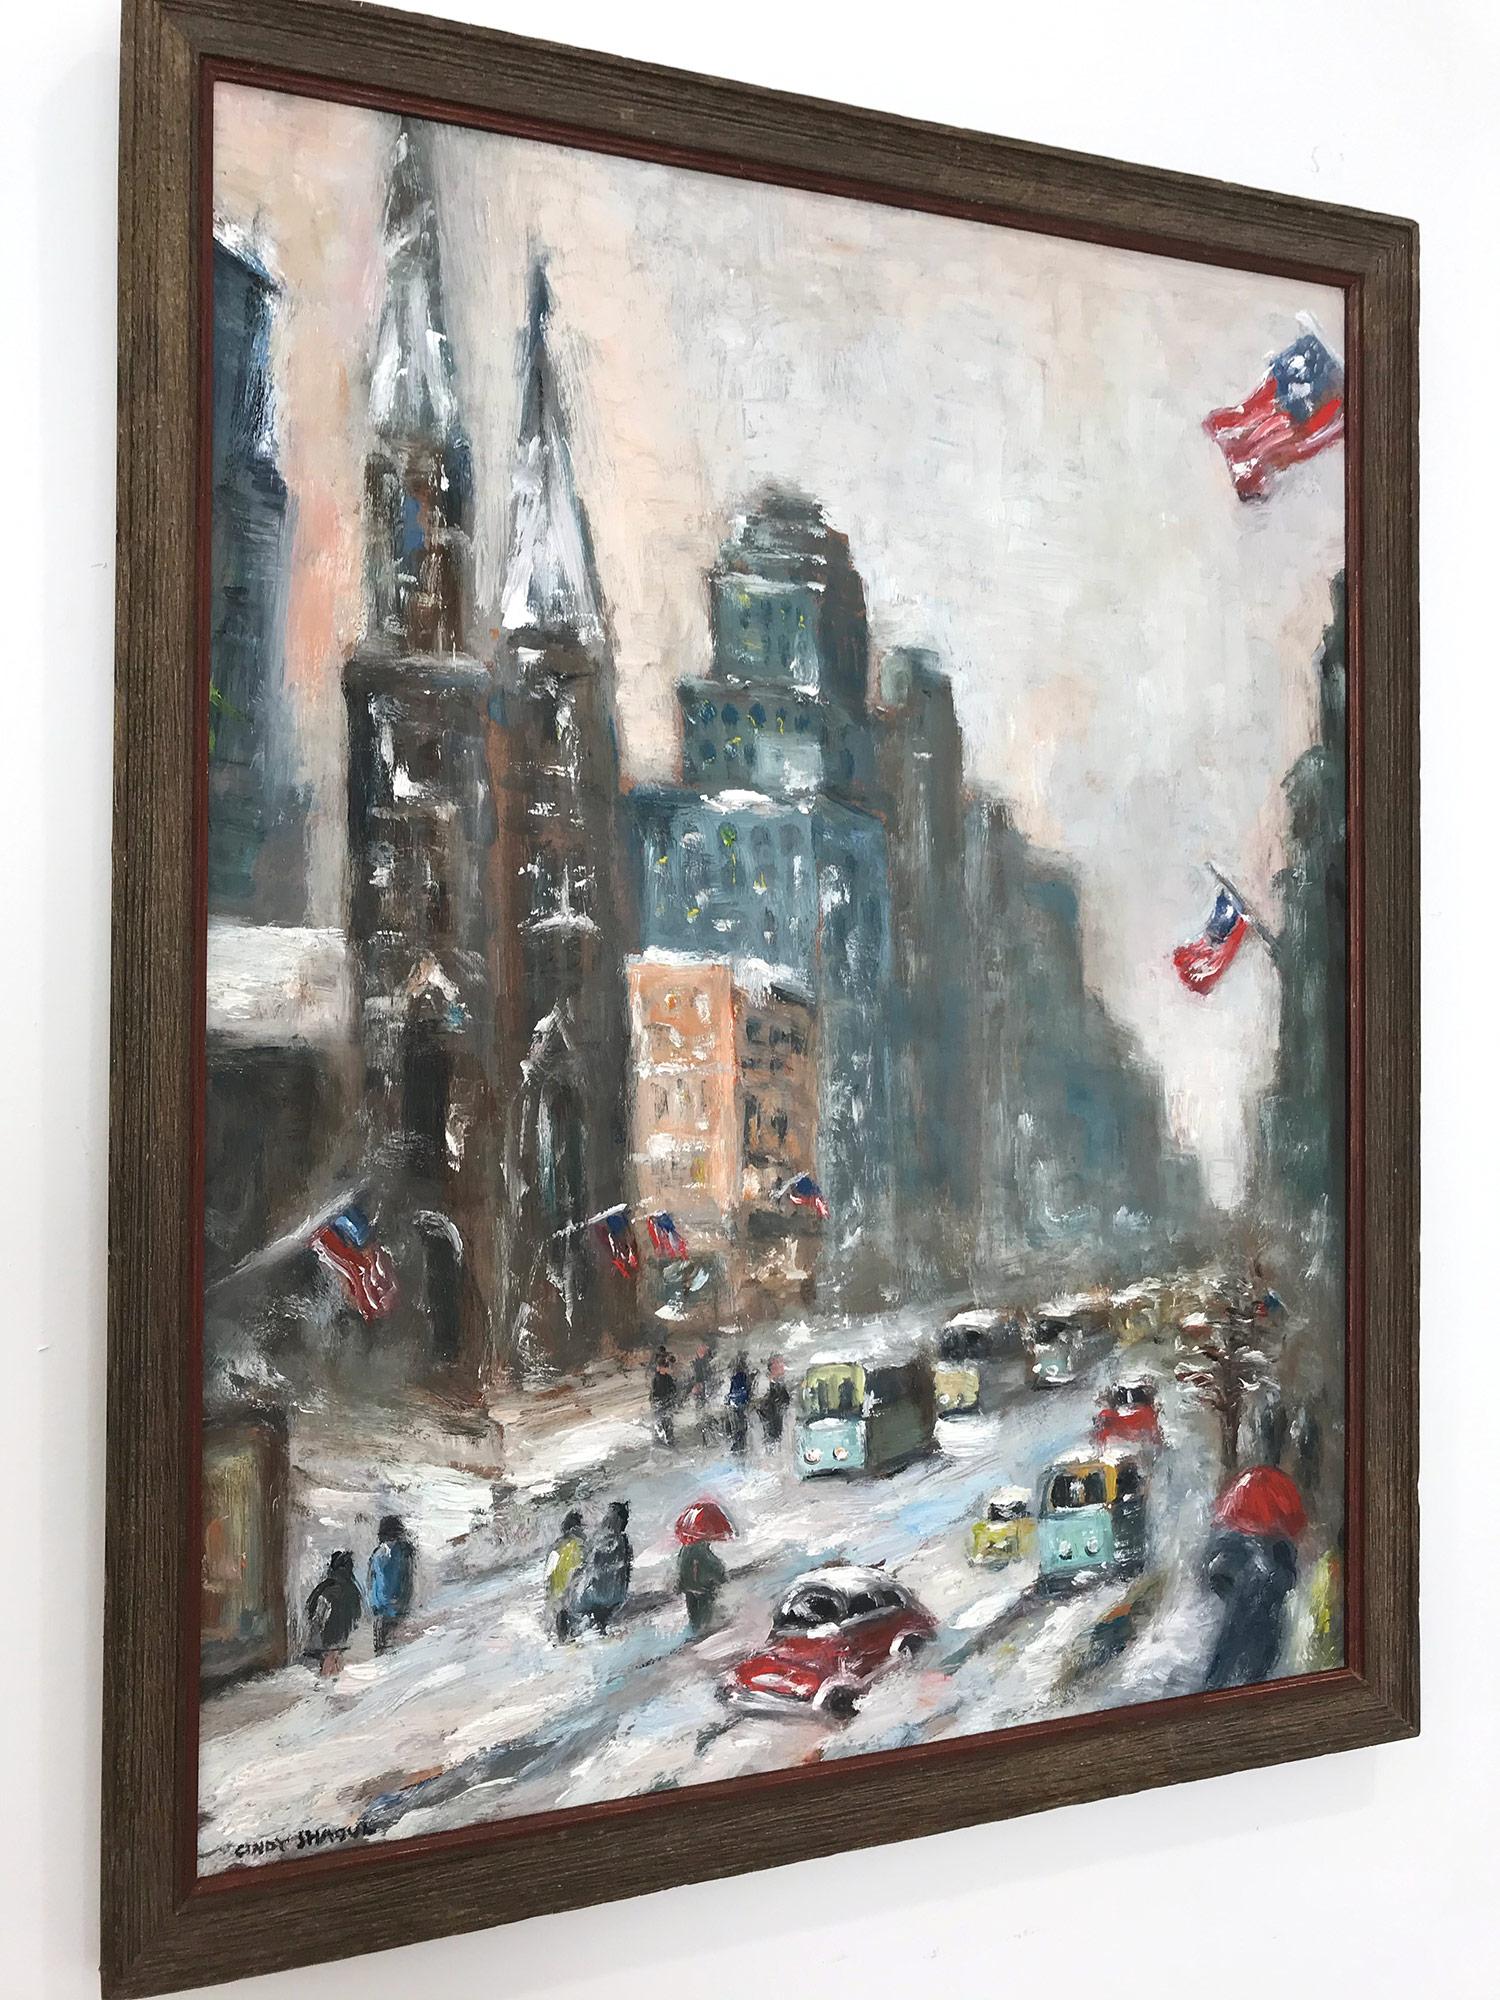 Snow in Downtown Wall Street, Impressionist Street Scene in style of Guy Wiggins 12